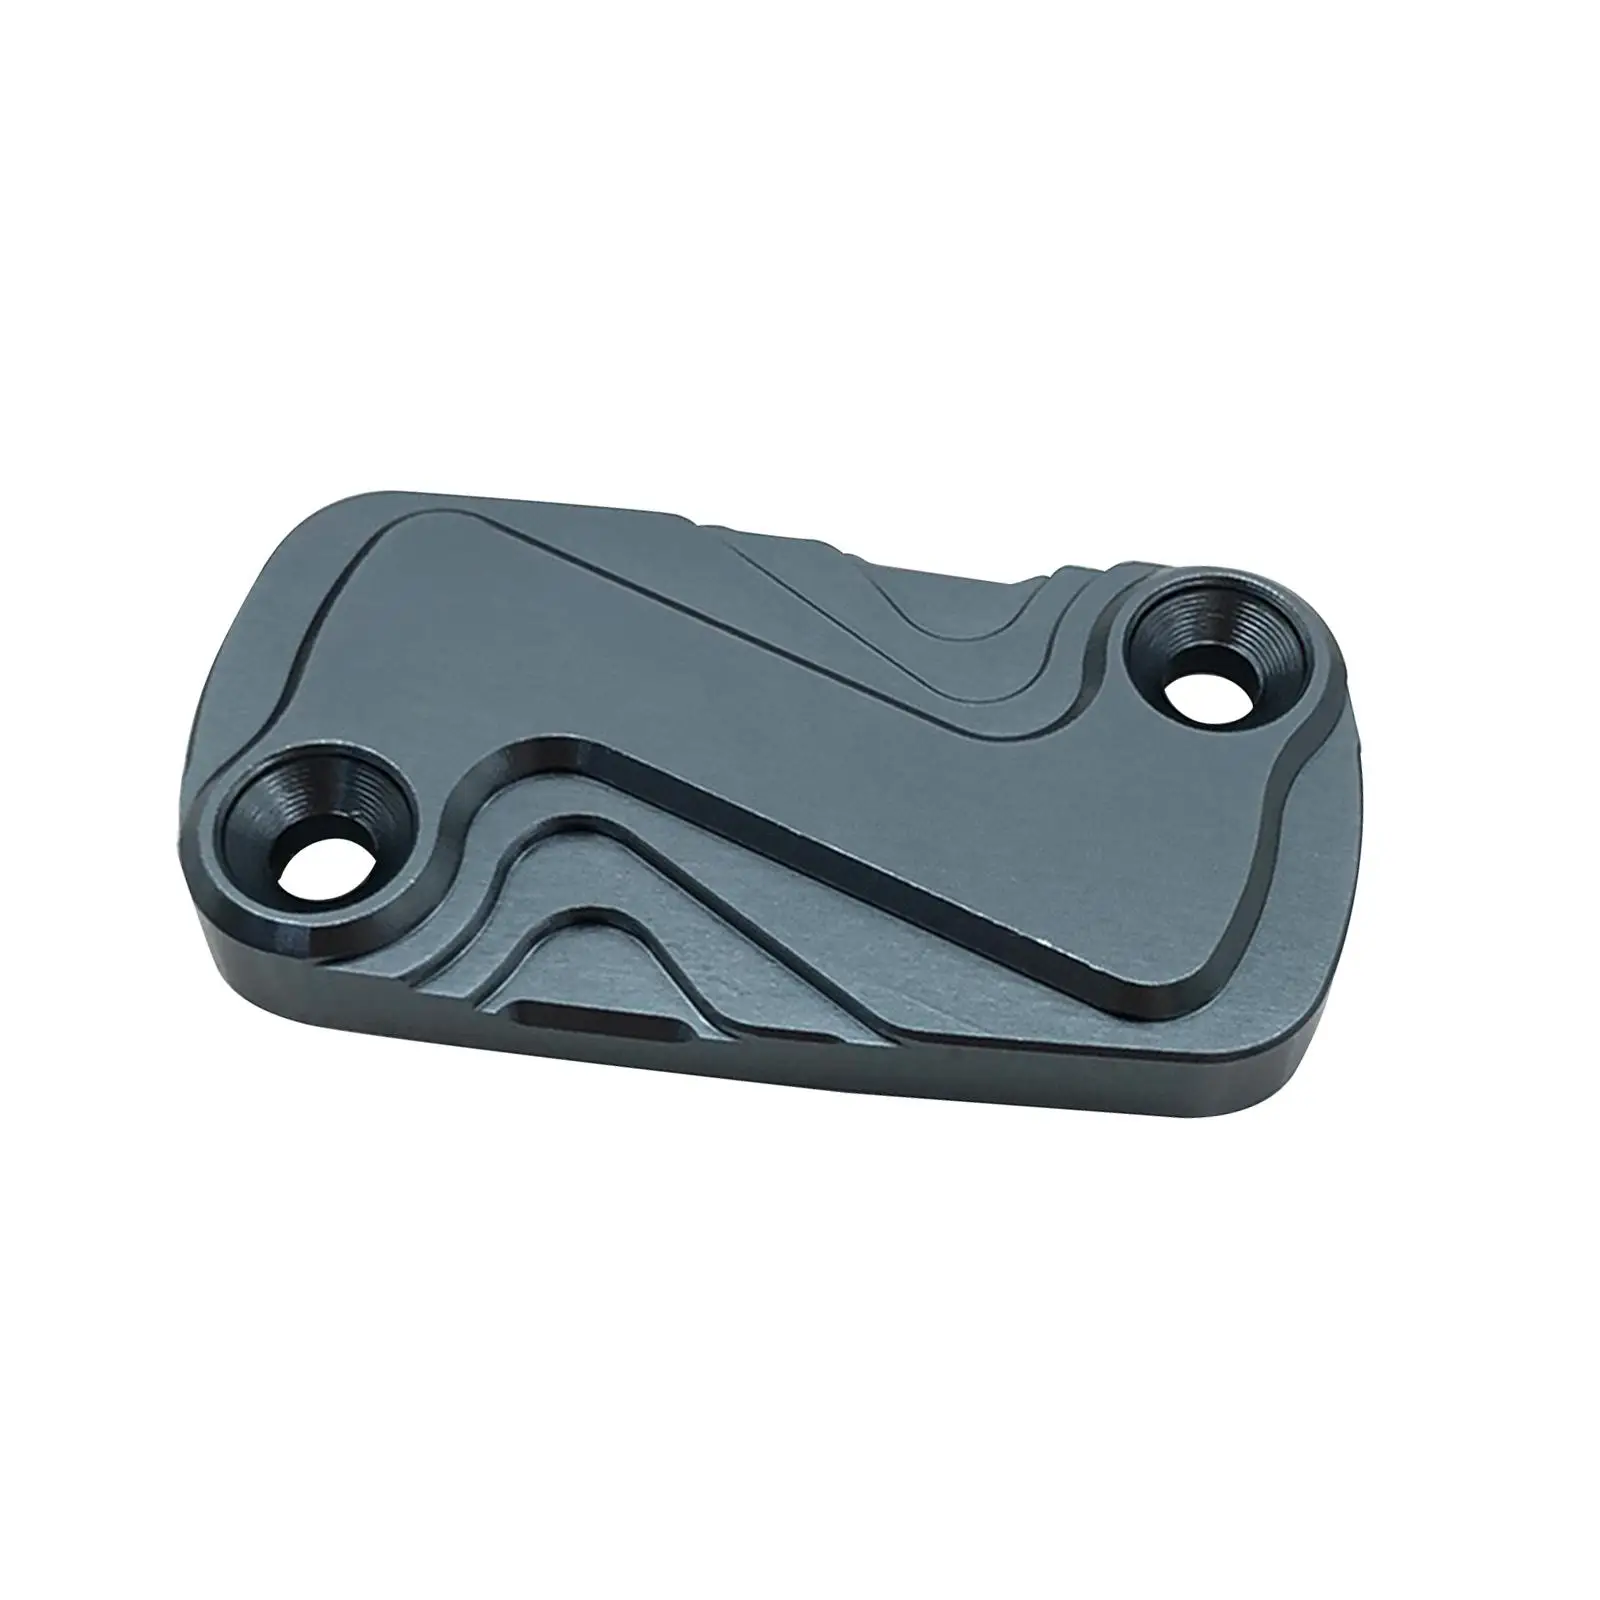 Front Brake Reservoir Cover Motorcycle Screw Cap Repair Accessories fors750 Accessories Replacement Premium Durable